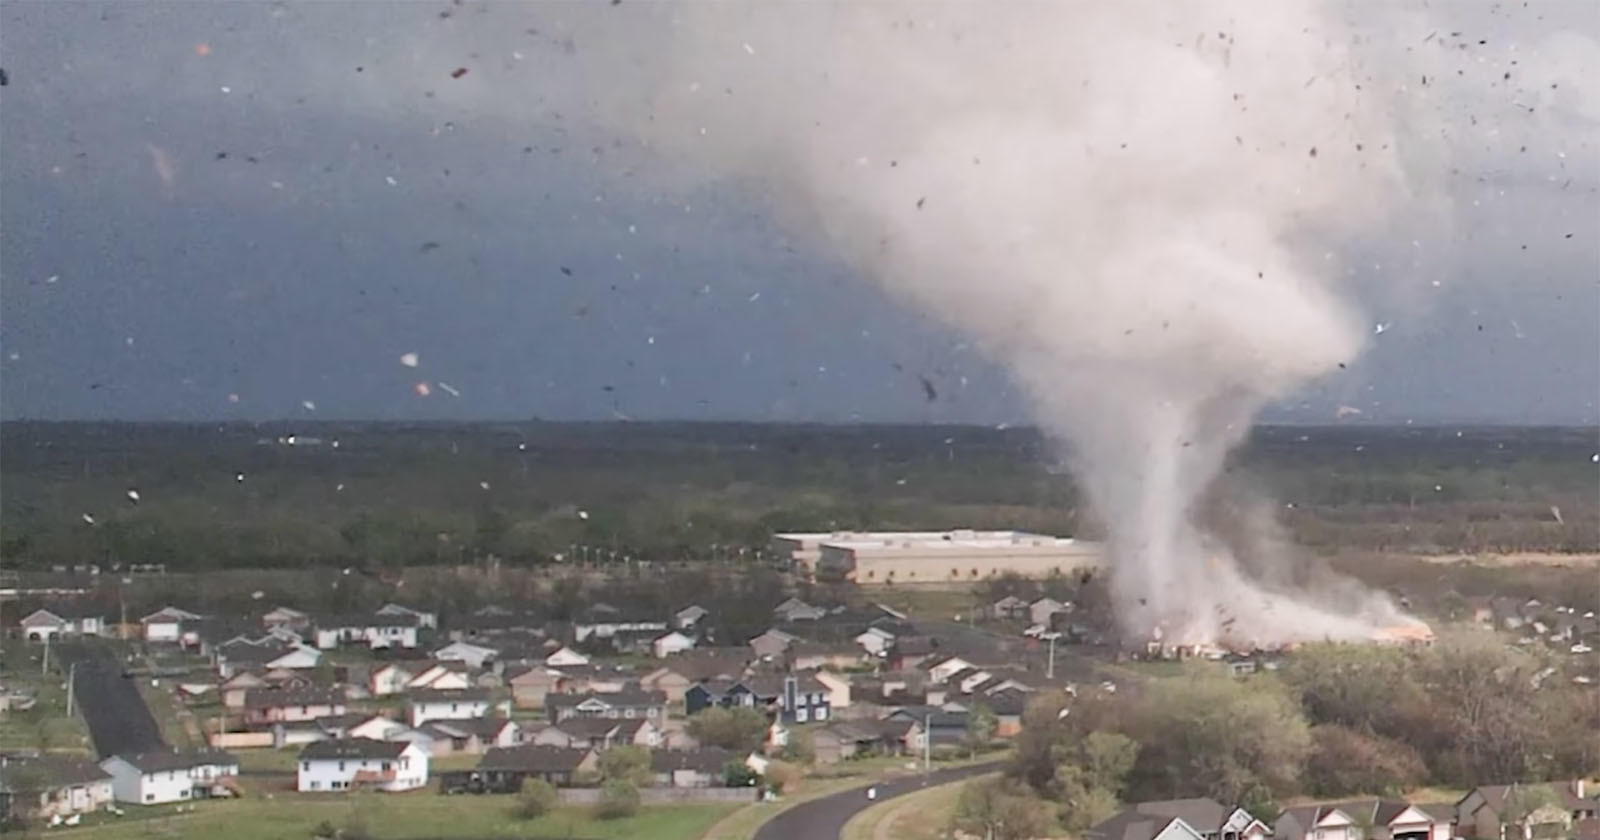 Drone Camera Captures Devastating Tornado From the Air